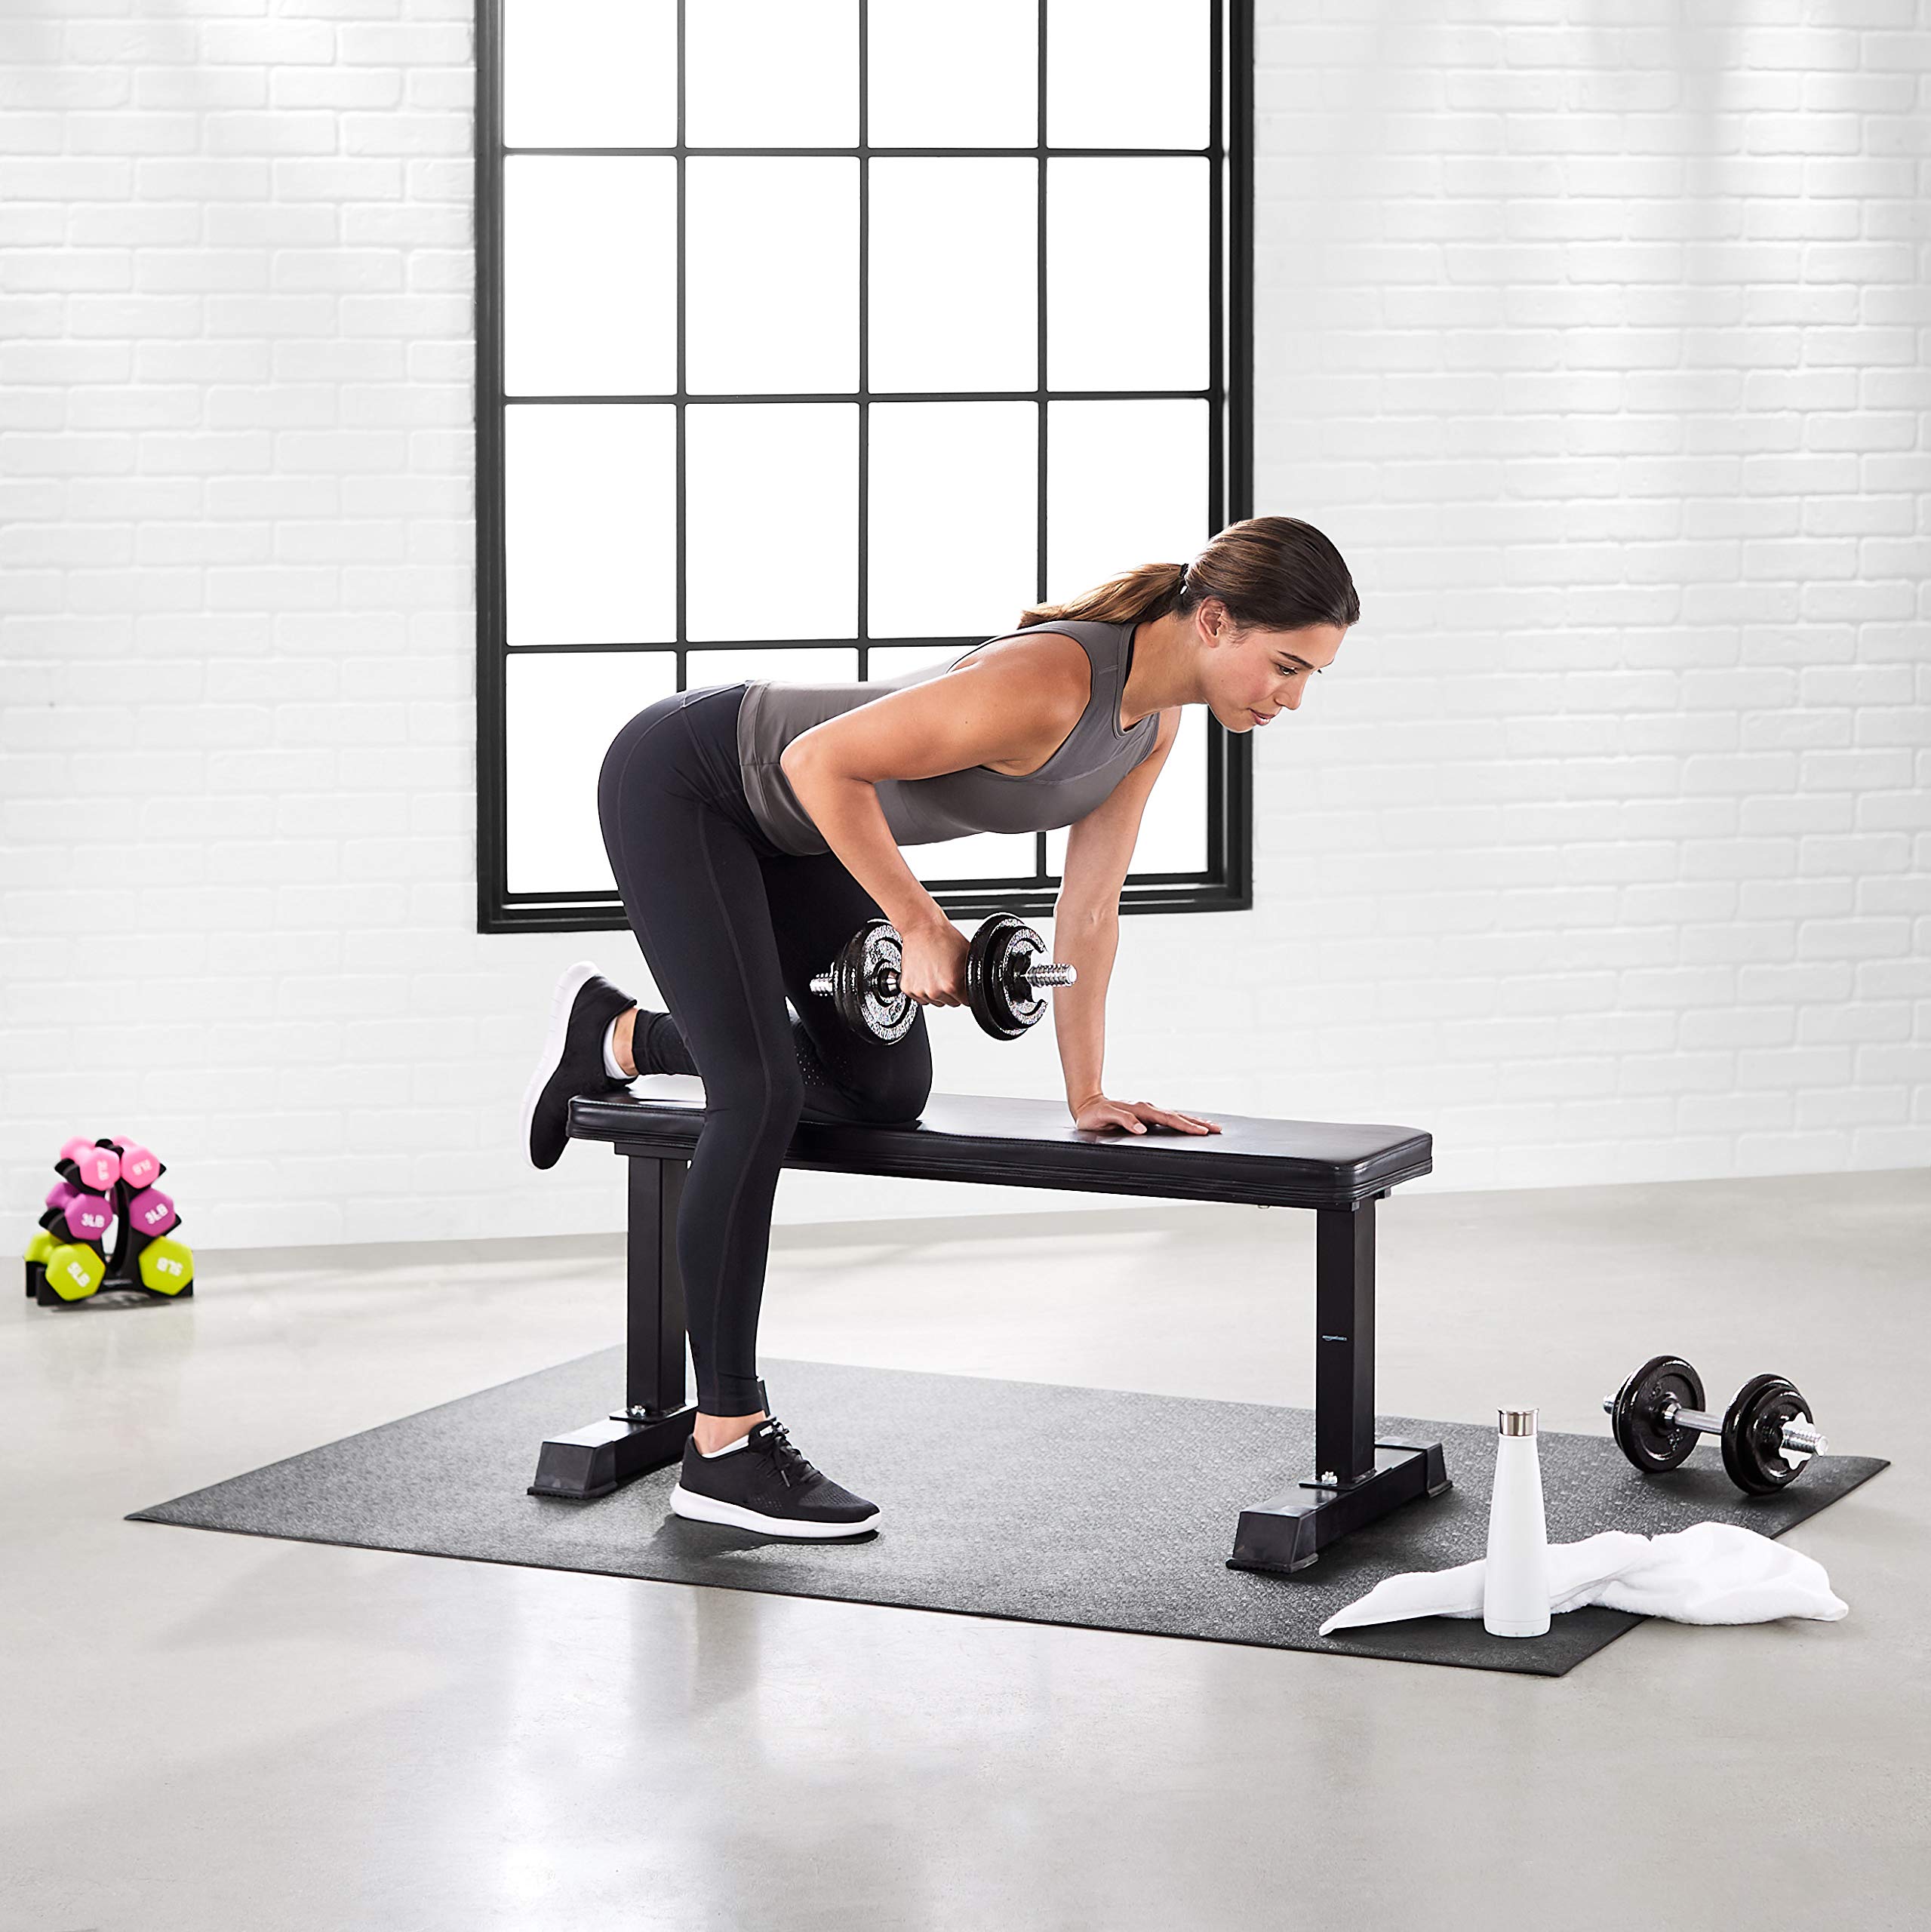 Amazon Basics High Density Exercise Equipment and Treadmill Mat